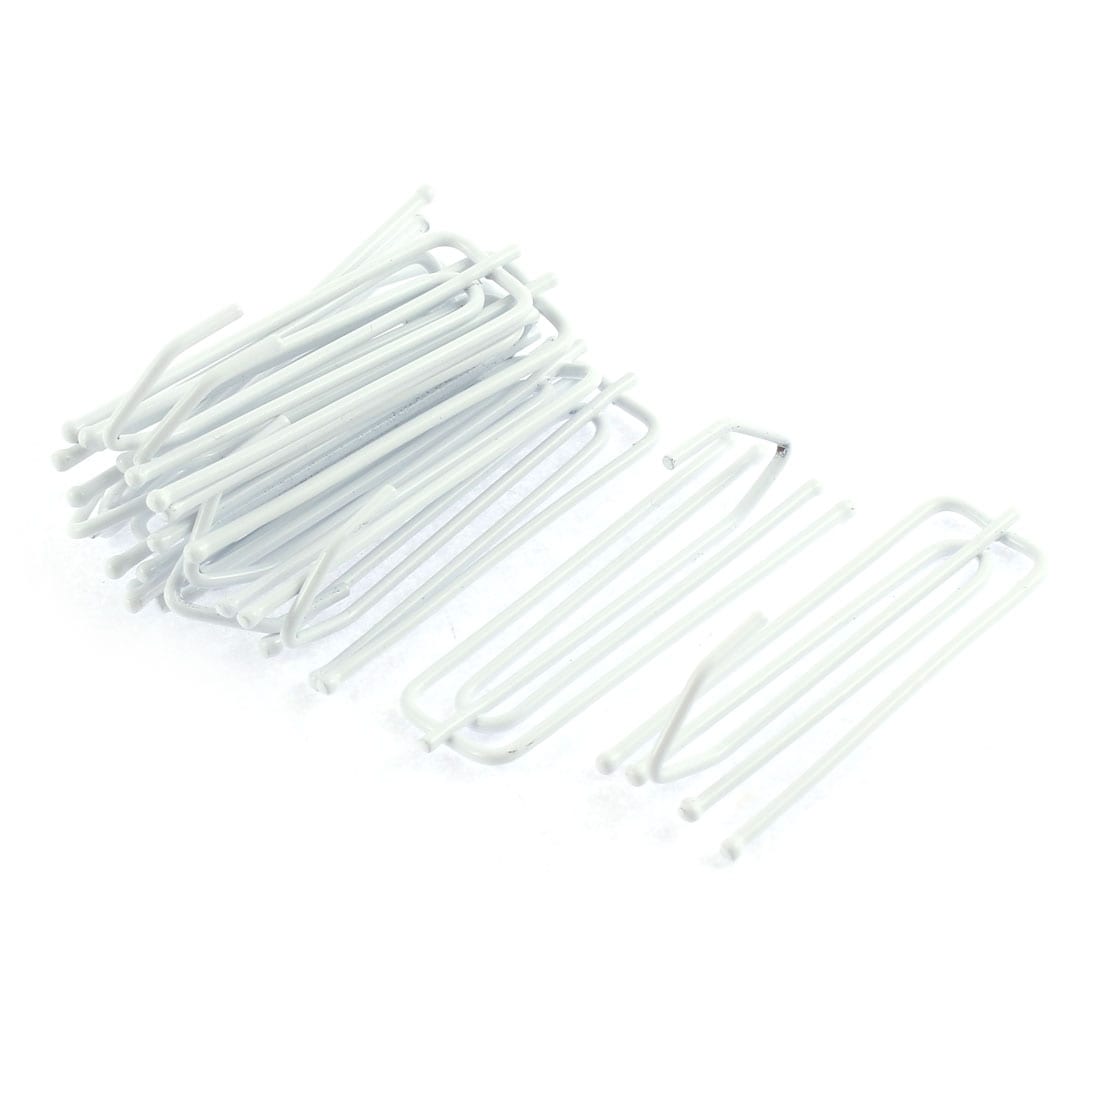 Pleat Prong Curtain Hooks Silver Tone 7cm Length 30Pcs - Silver Tone -  Silver Tone - 2.7 x 0.9 x 0.7(L*W*H) - On Sale - Bed Bath & Beyond -  33903466